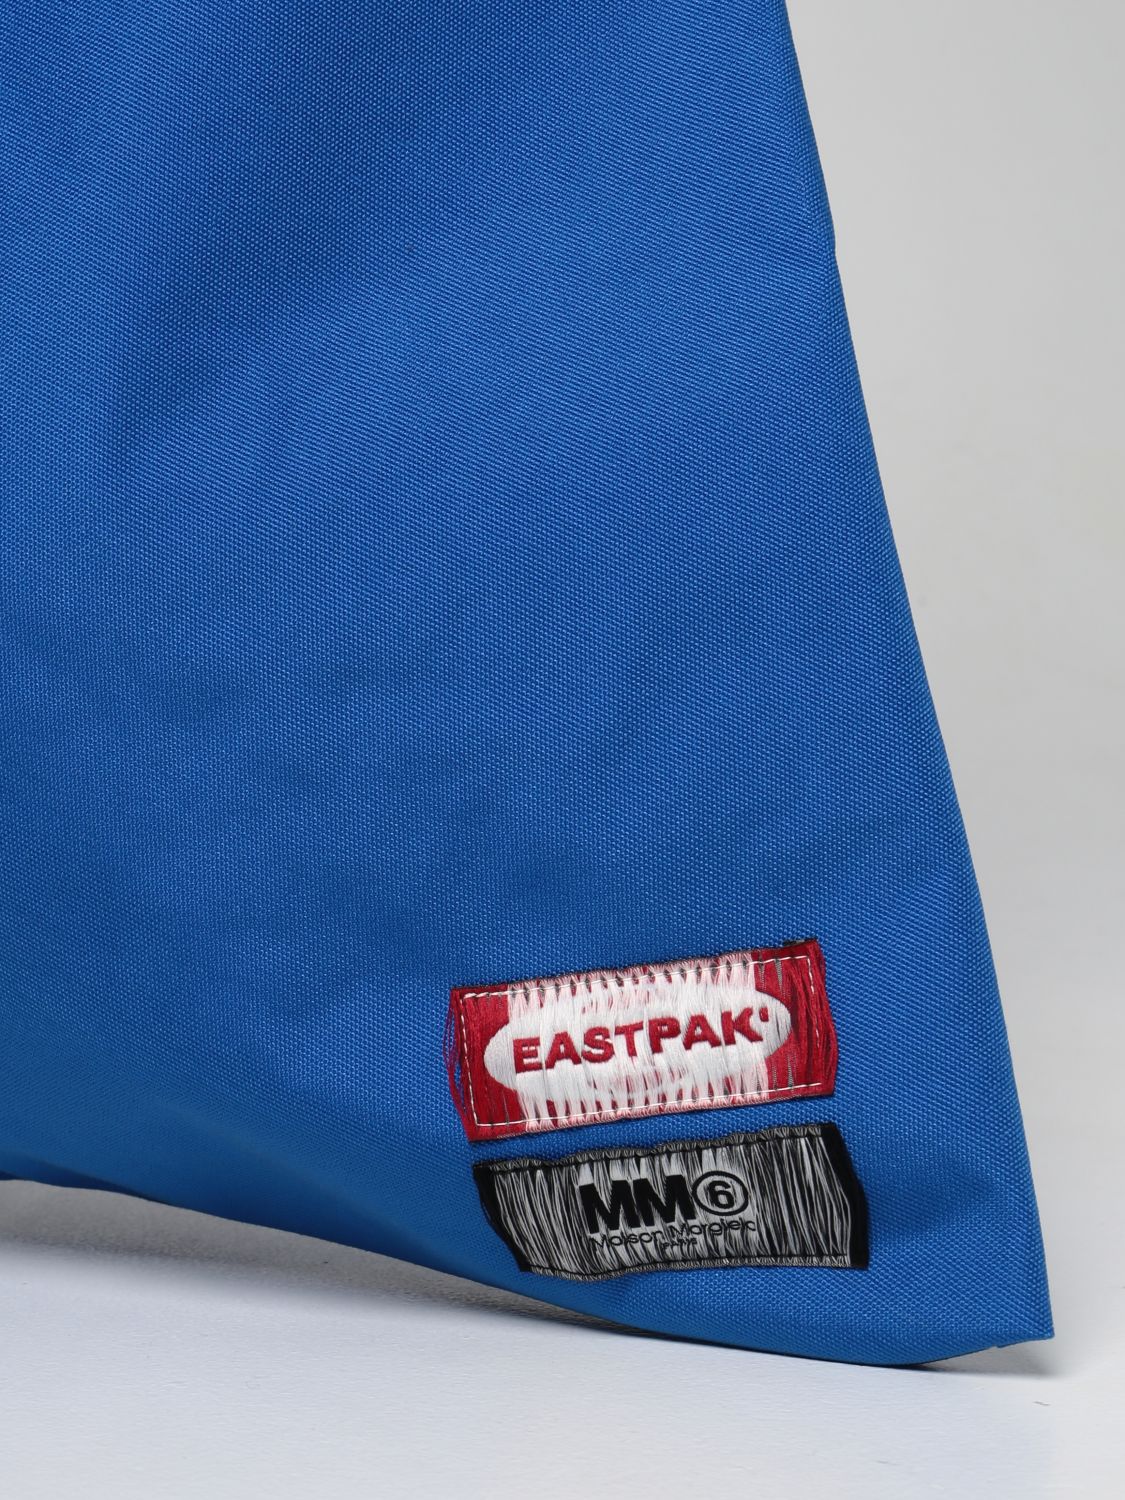 Sac Eastpak: Sac Eastpak homme bleu 3